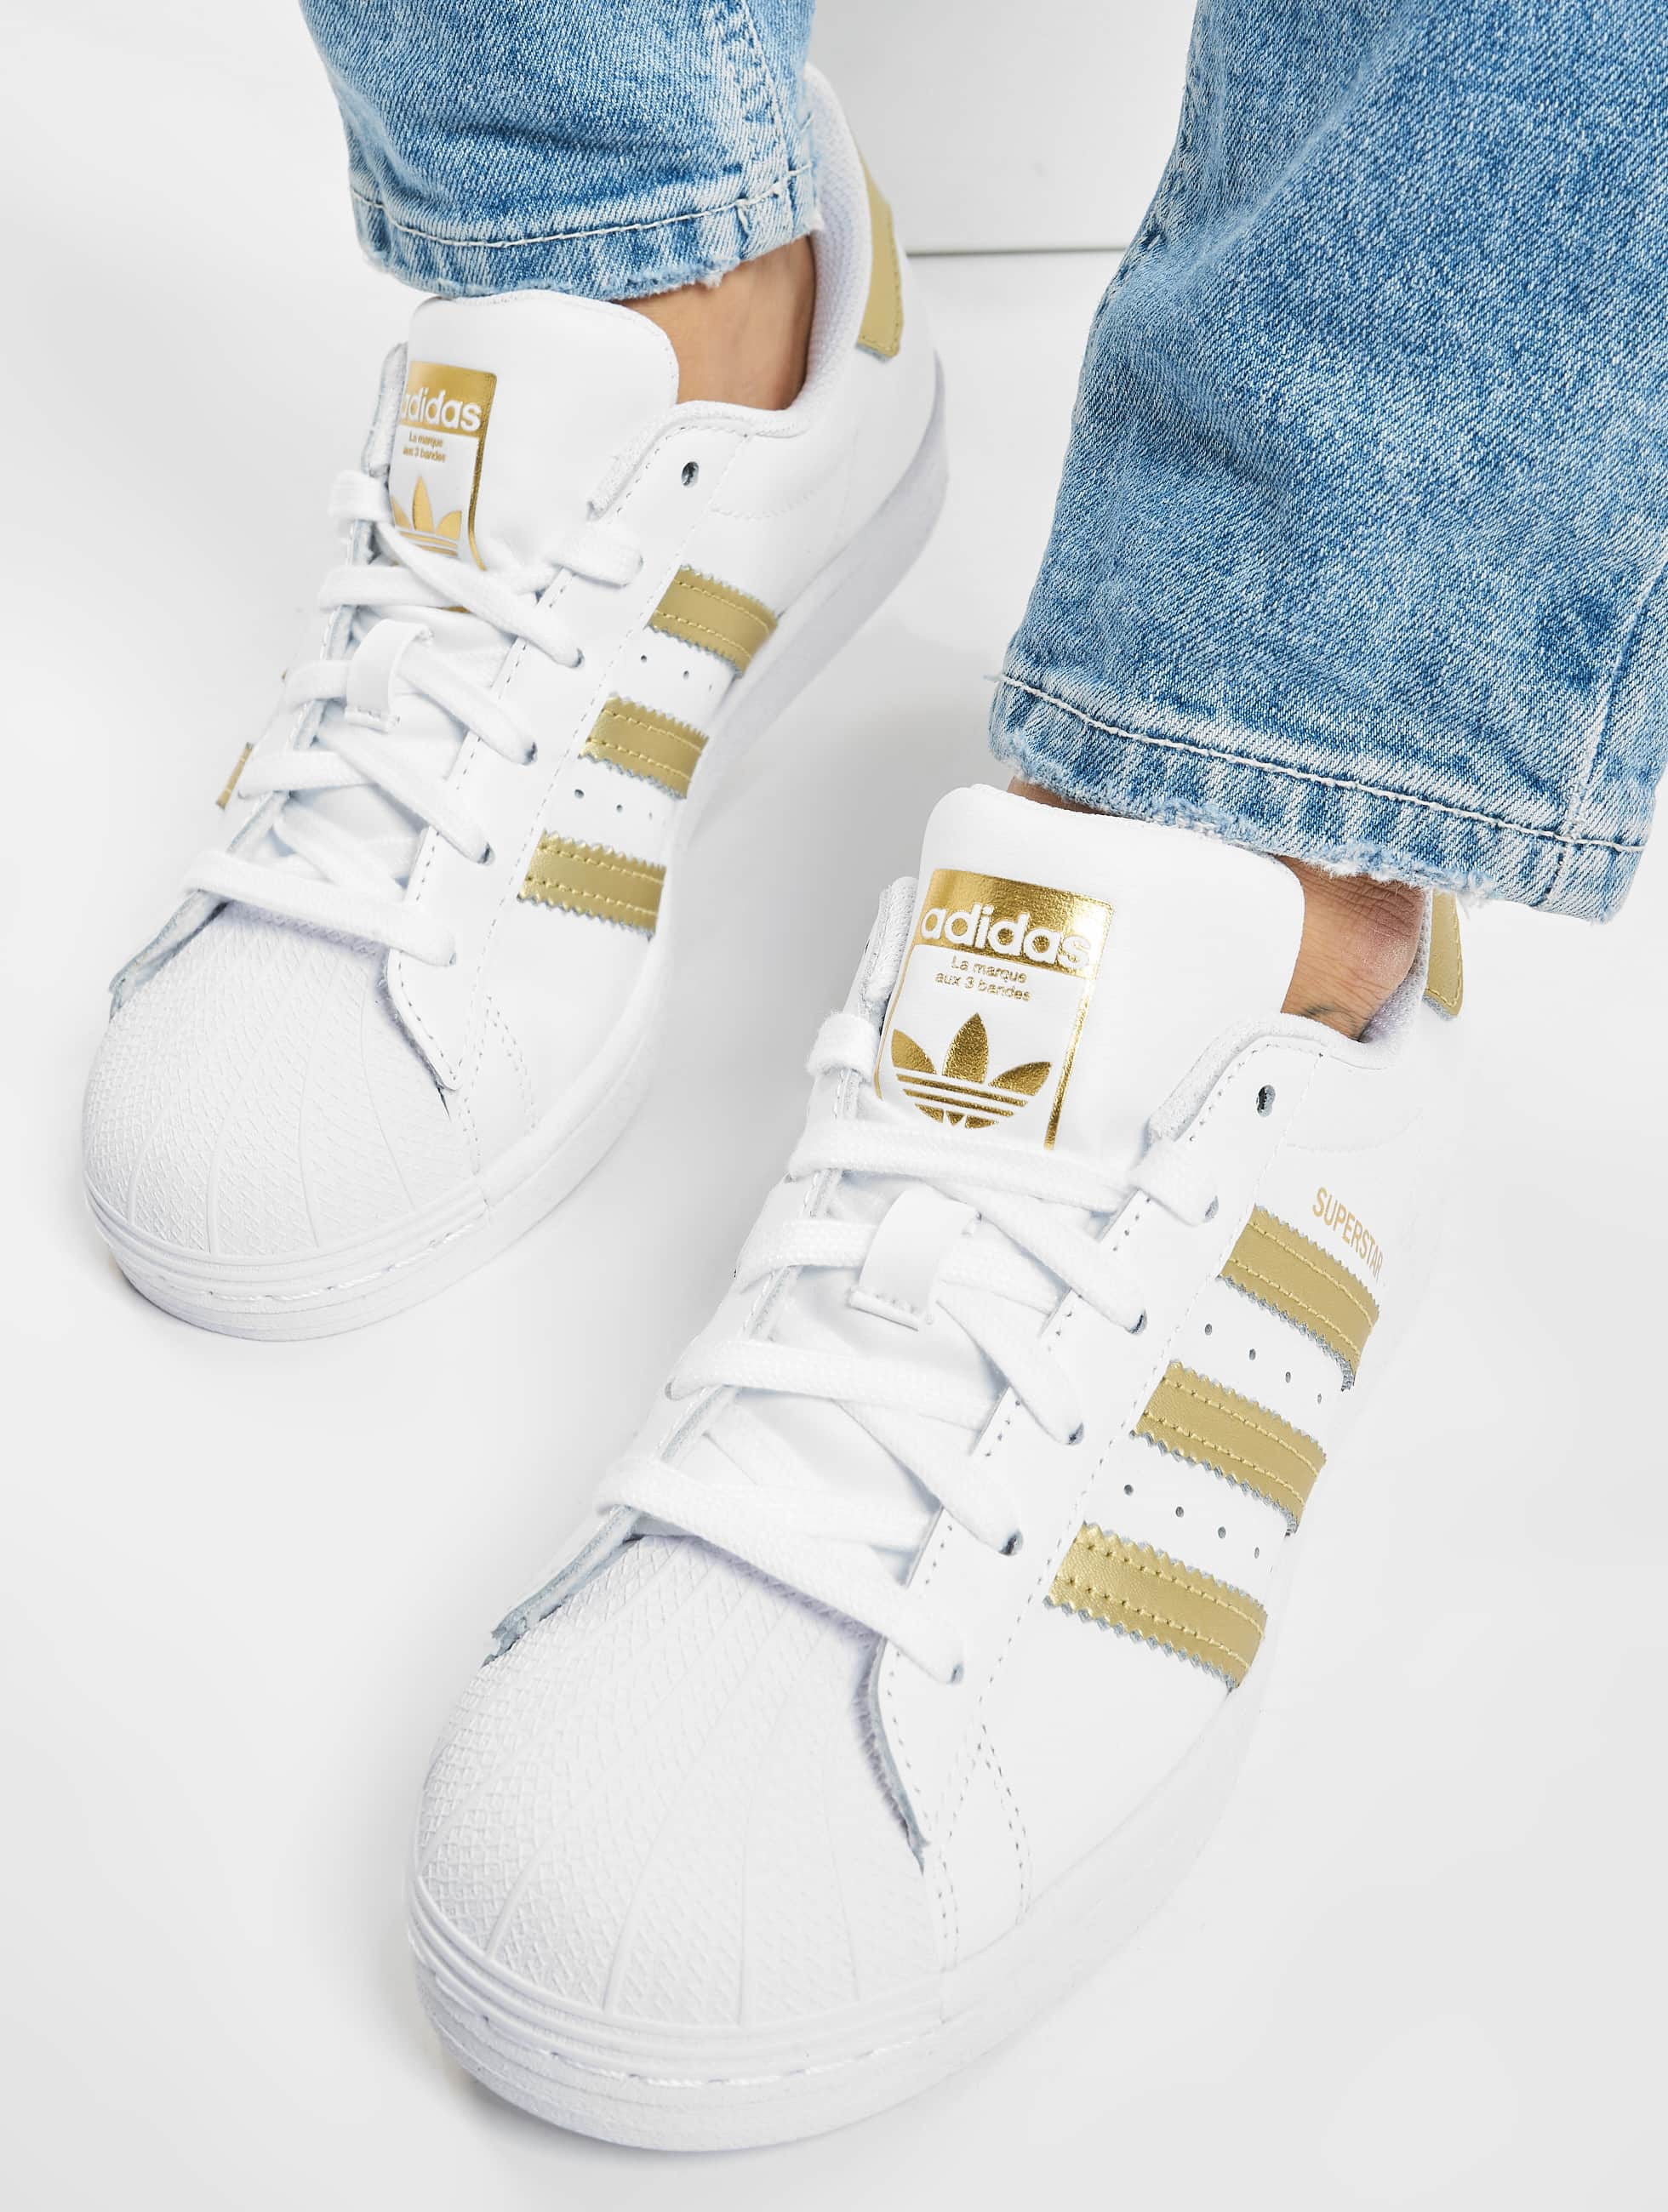 passage Superioriteit elleboog adidas Originals schoen / sneaker Superstar in wit 796085